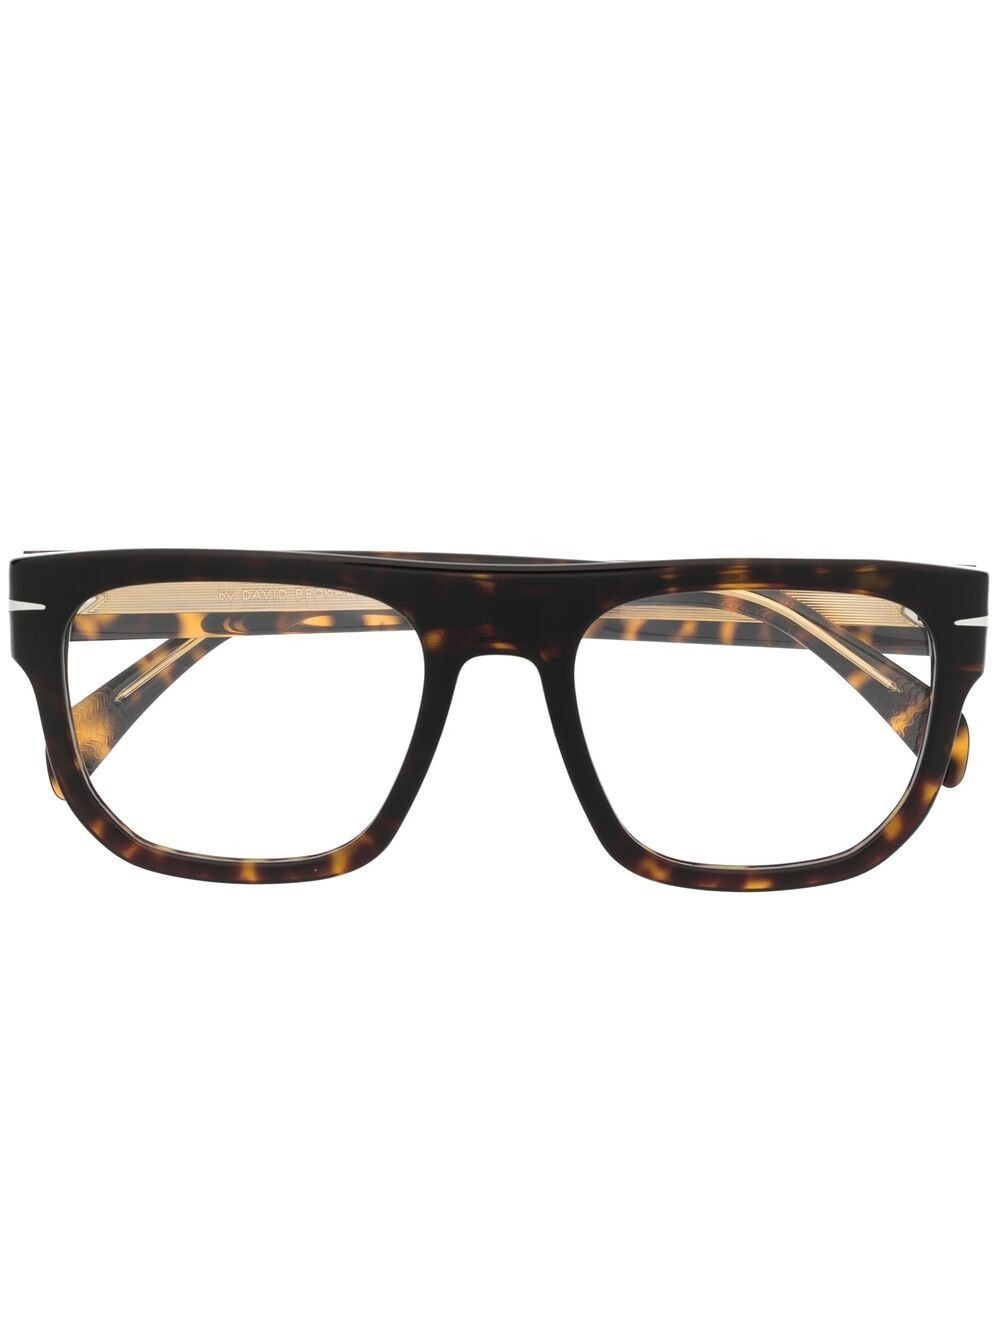 Eyewear by David Beckham square-frame glasses - Brown von Eyewear by David Beckham